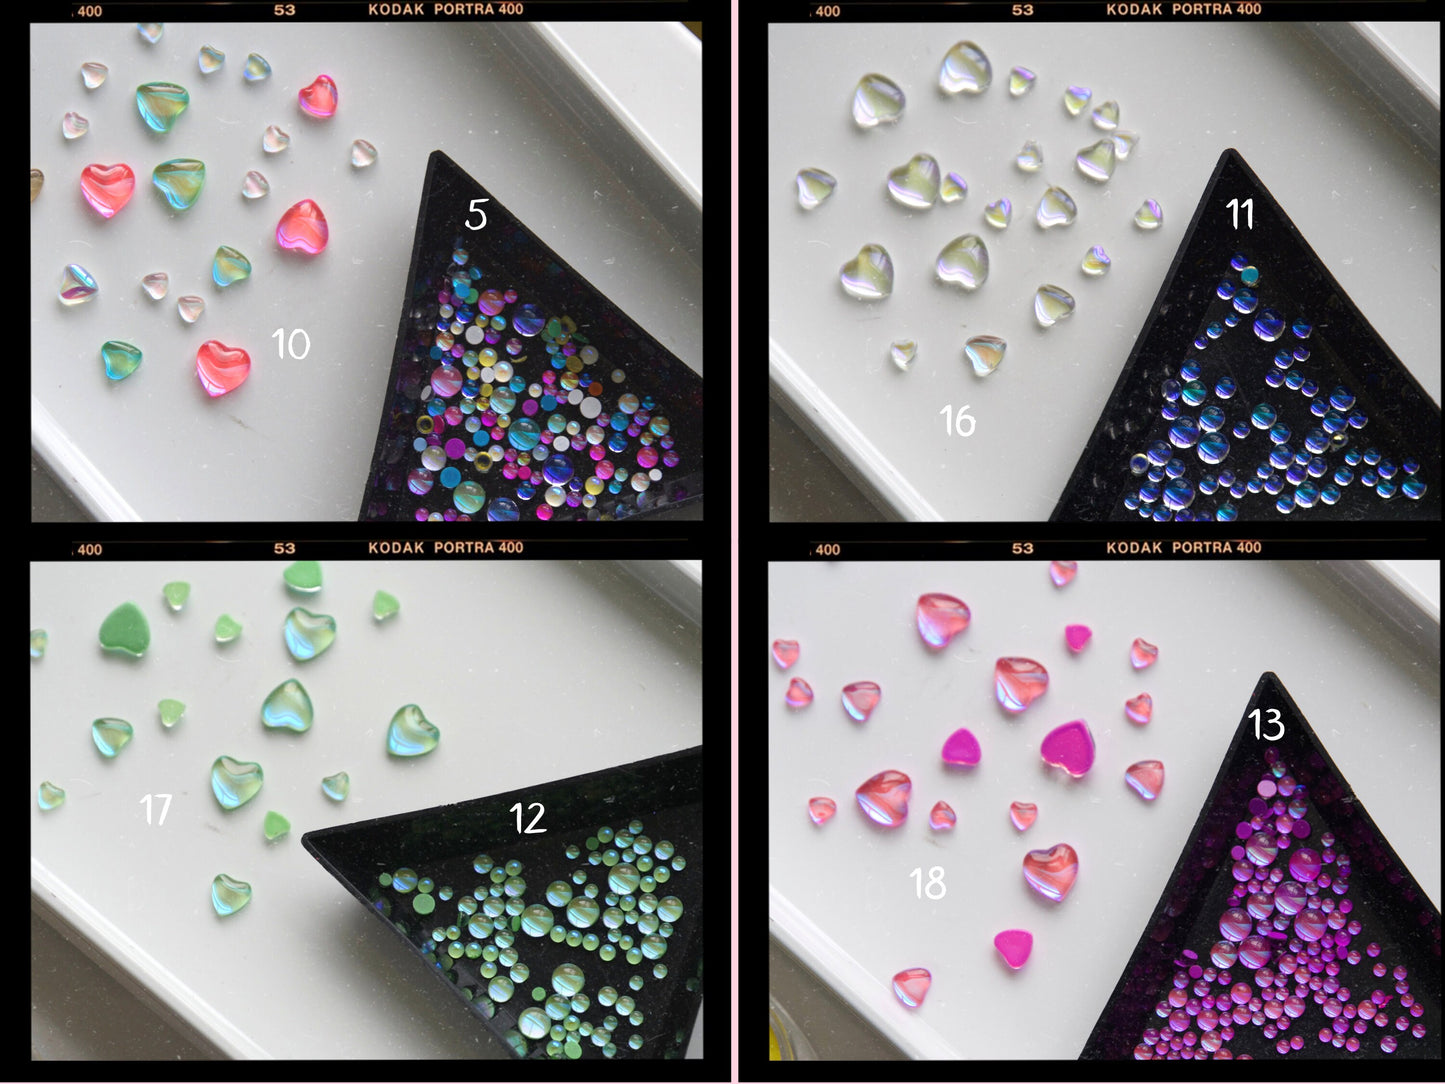 80pcs Polar light Glass Beads Nail Art/ Mixed Semicircular Galaxy Heart pearls nail art charm / Luminous Mocha light-catching semi bead